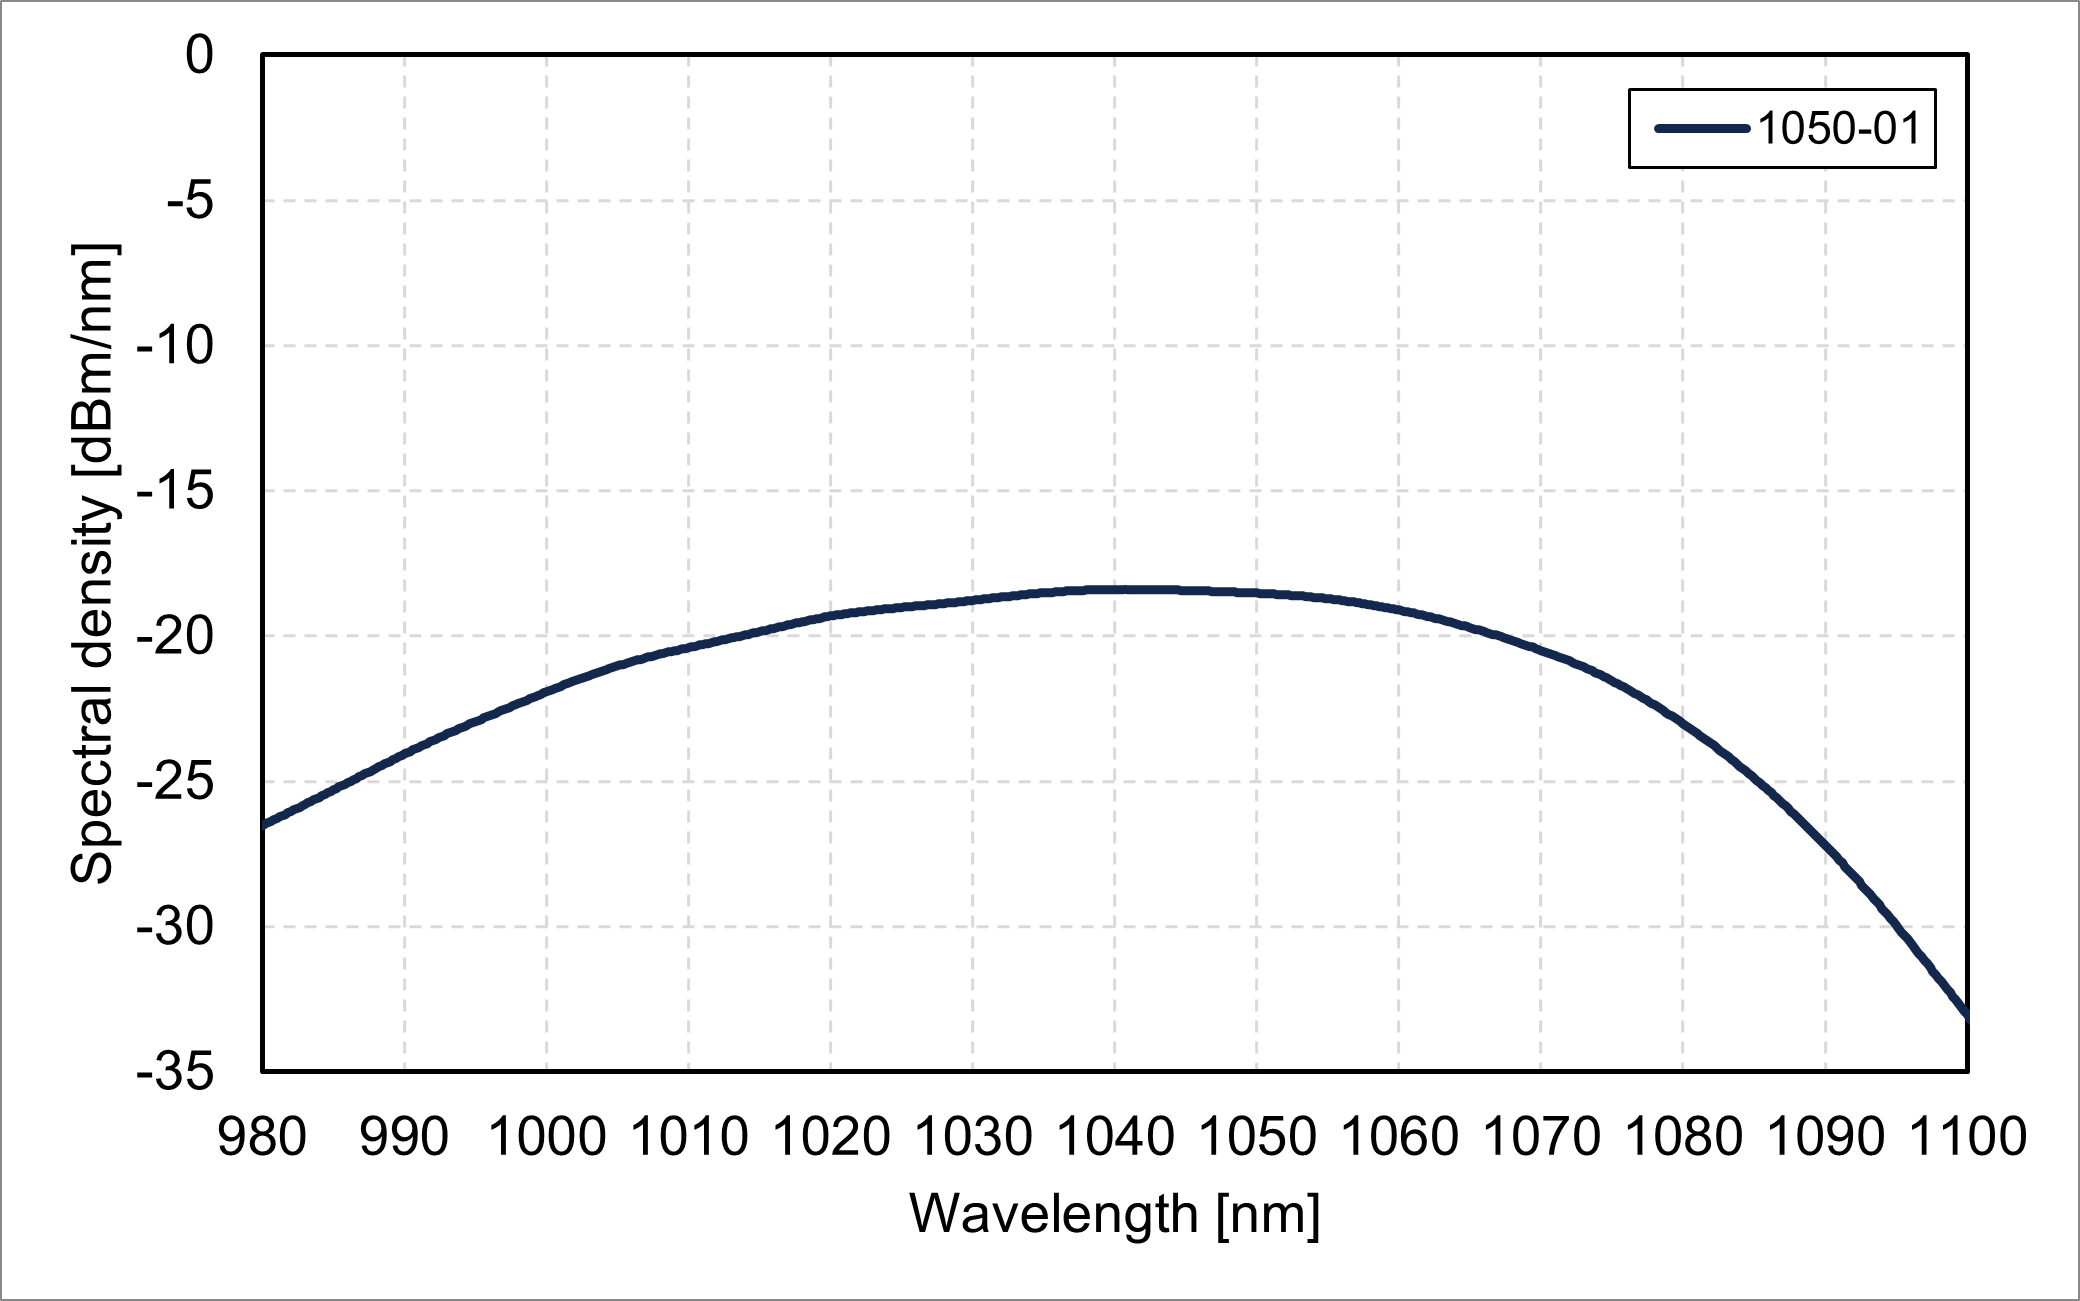 Spectral density vs. wavelength (1050-01)